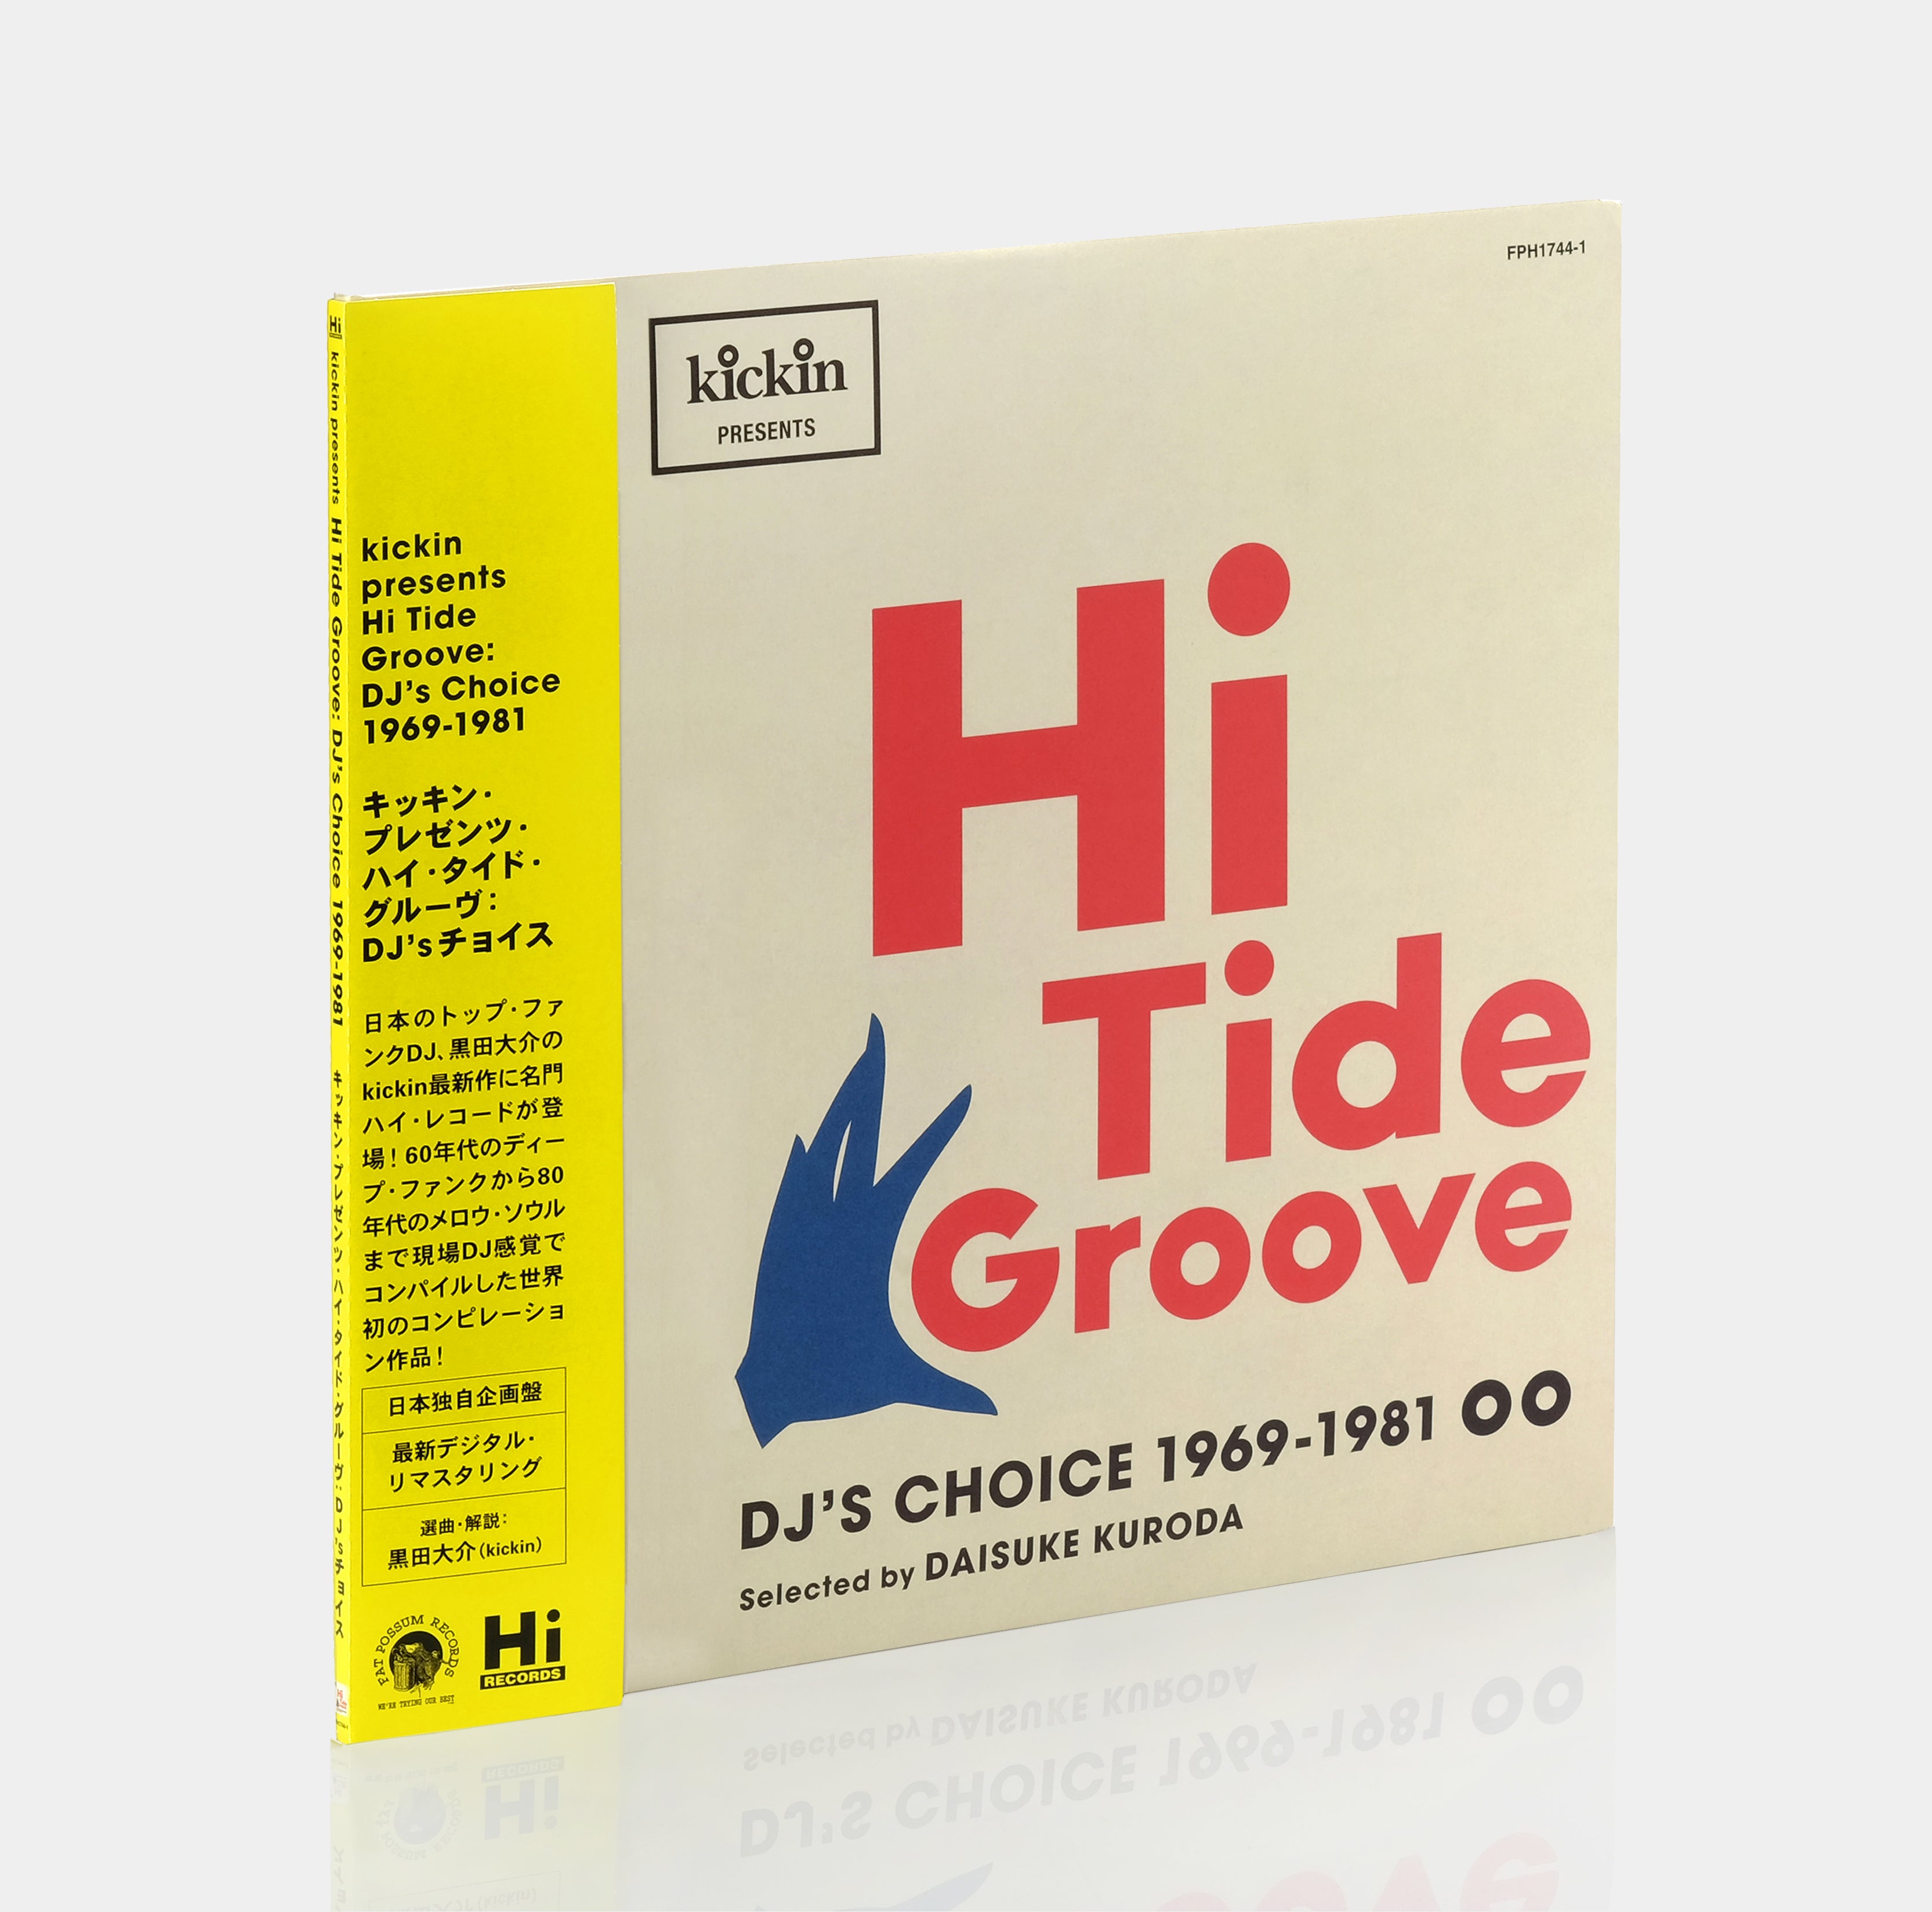 Kickin Presents Hi Tide Groove (DJ's Choice 1969-1981) 2xLP Red & Blue Vinyl Record